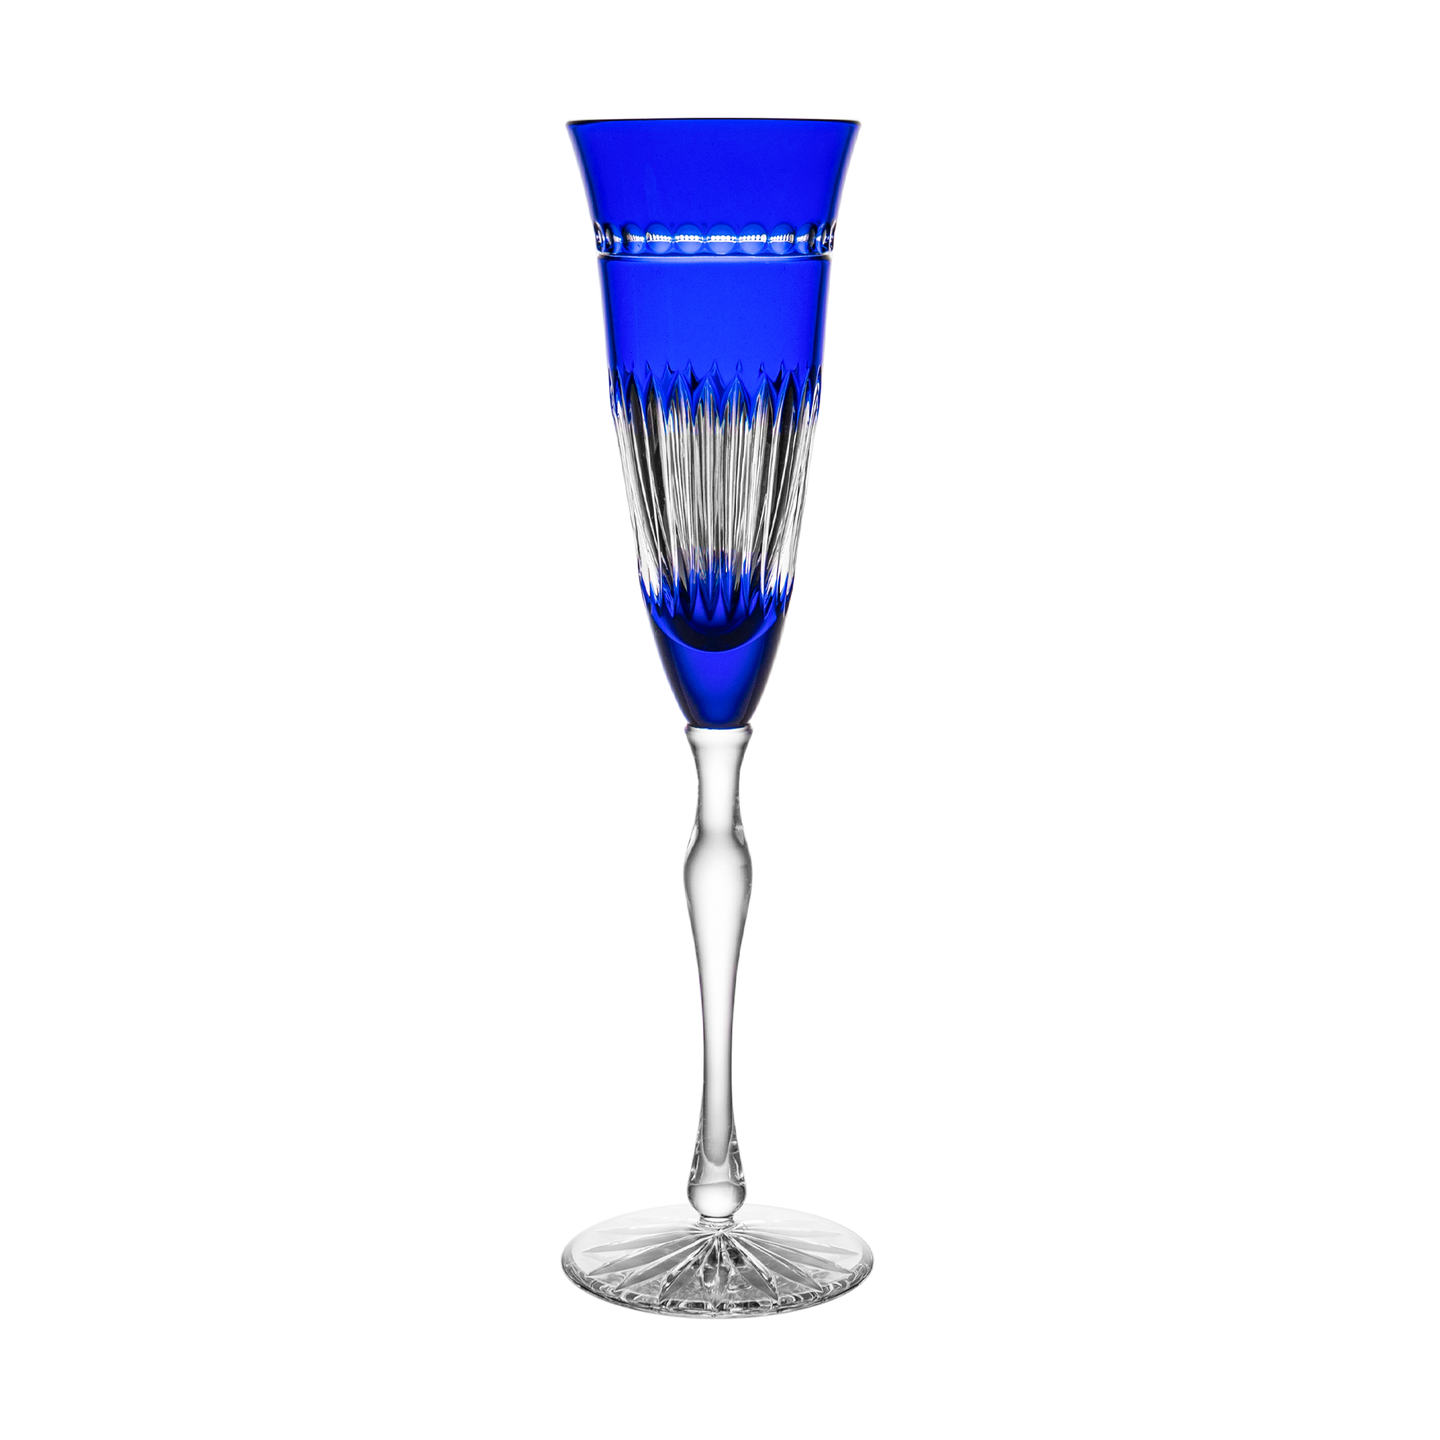 Turbie Blue Champagne Flute